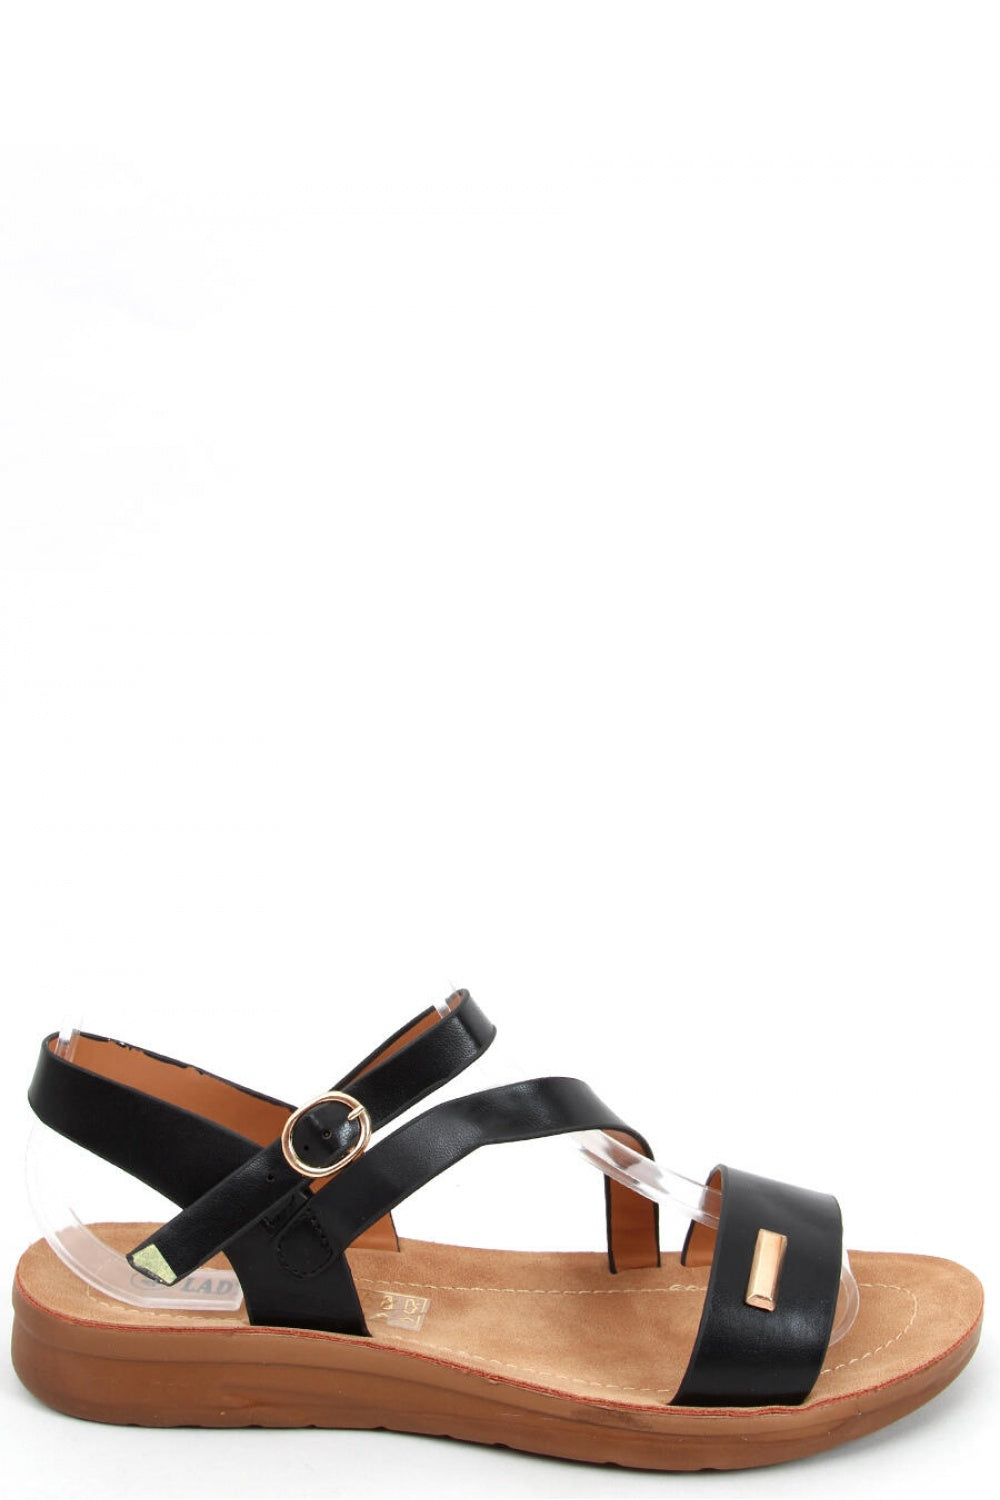 Sandals model 166582 Inello Posh Styles Apparel